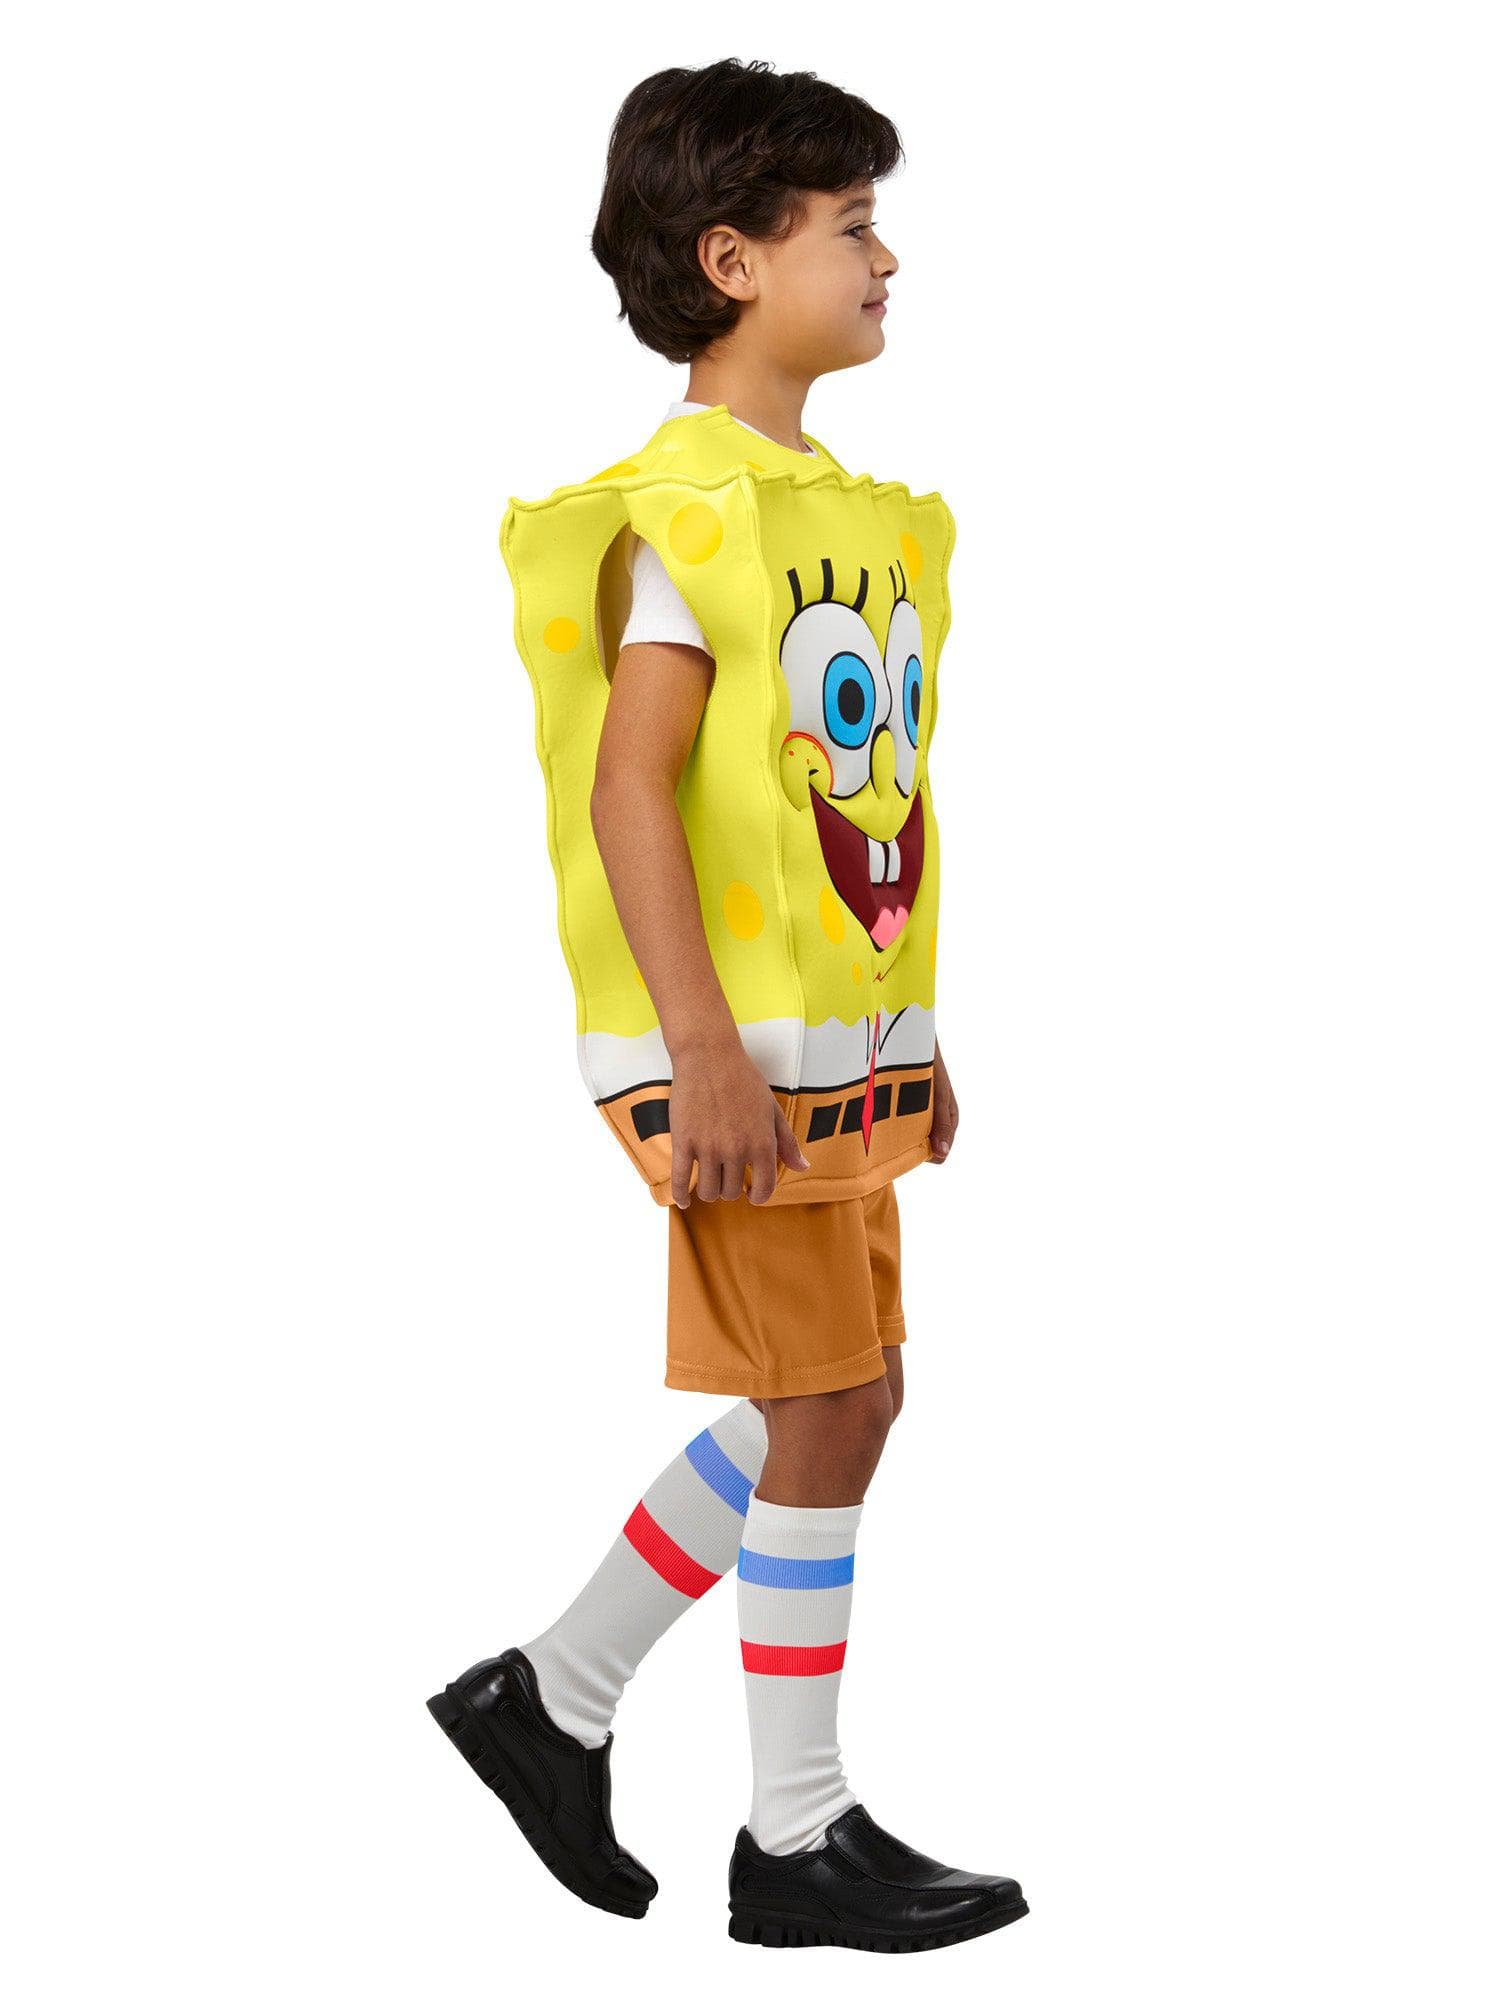 SpongeBob SquarePants Kids Costume - costumes.com